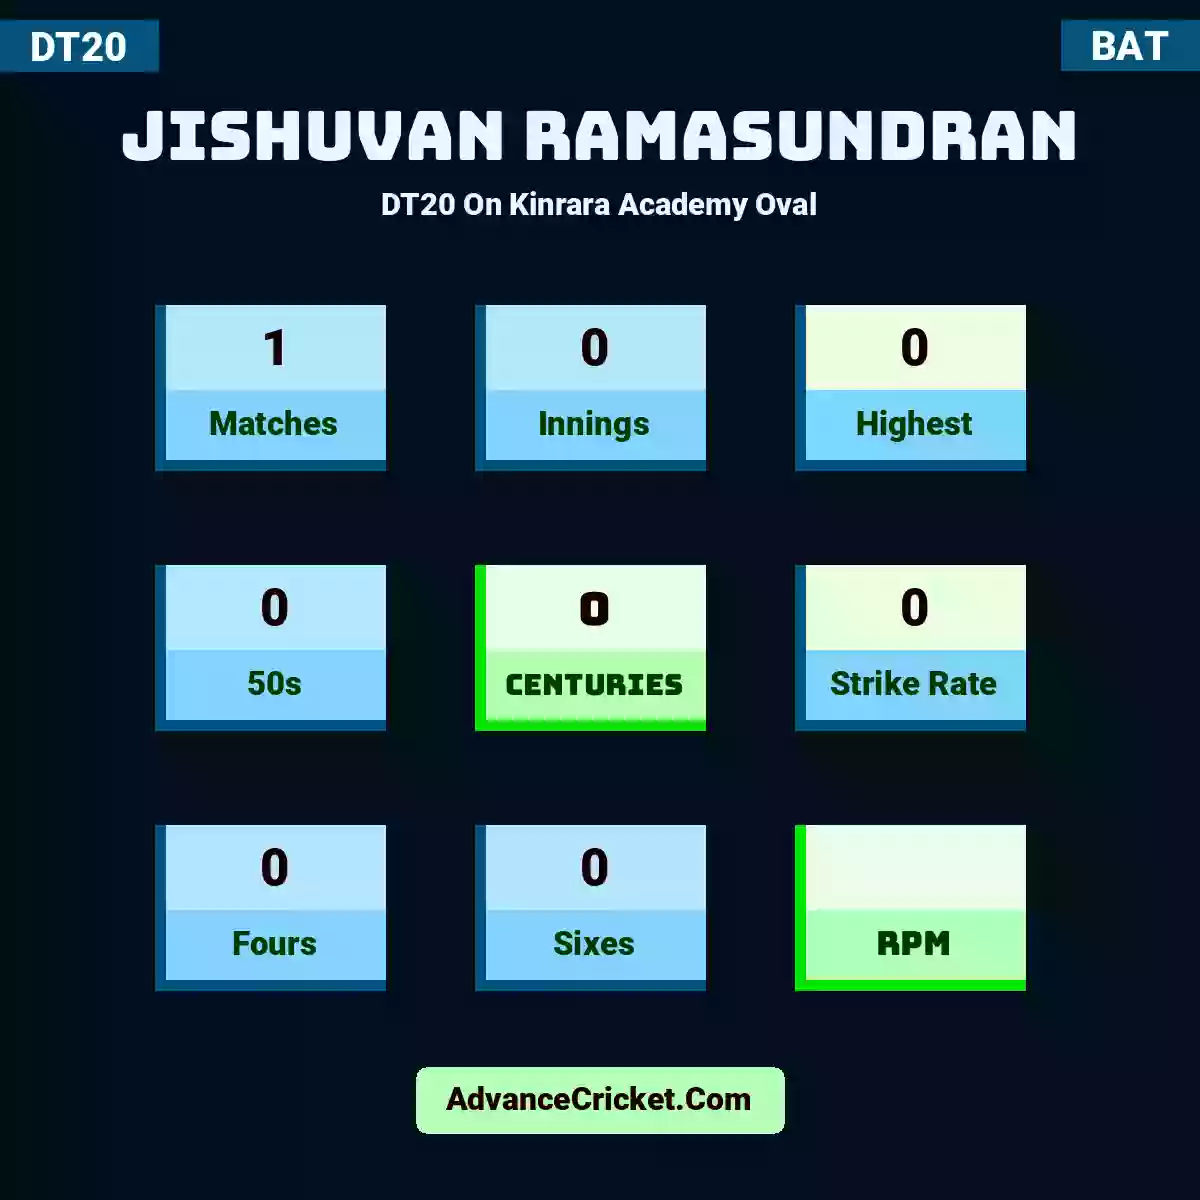 Jishuvan Ramasundran DT20  On Kinrara Academy Oval, Jishuvan Ramasundran played 1 matches, scored 0 runs as highest, 0 half-centuries, and 0 centuries, with a strike rate of 0. J.Ramasundran hit 0 fours and 0 sixes.